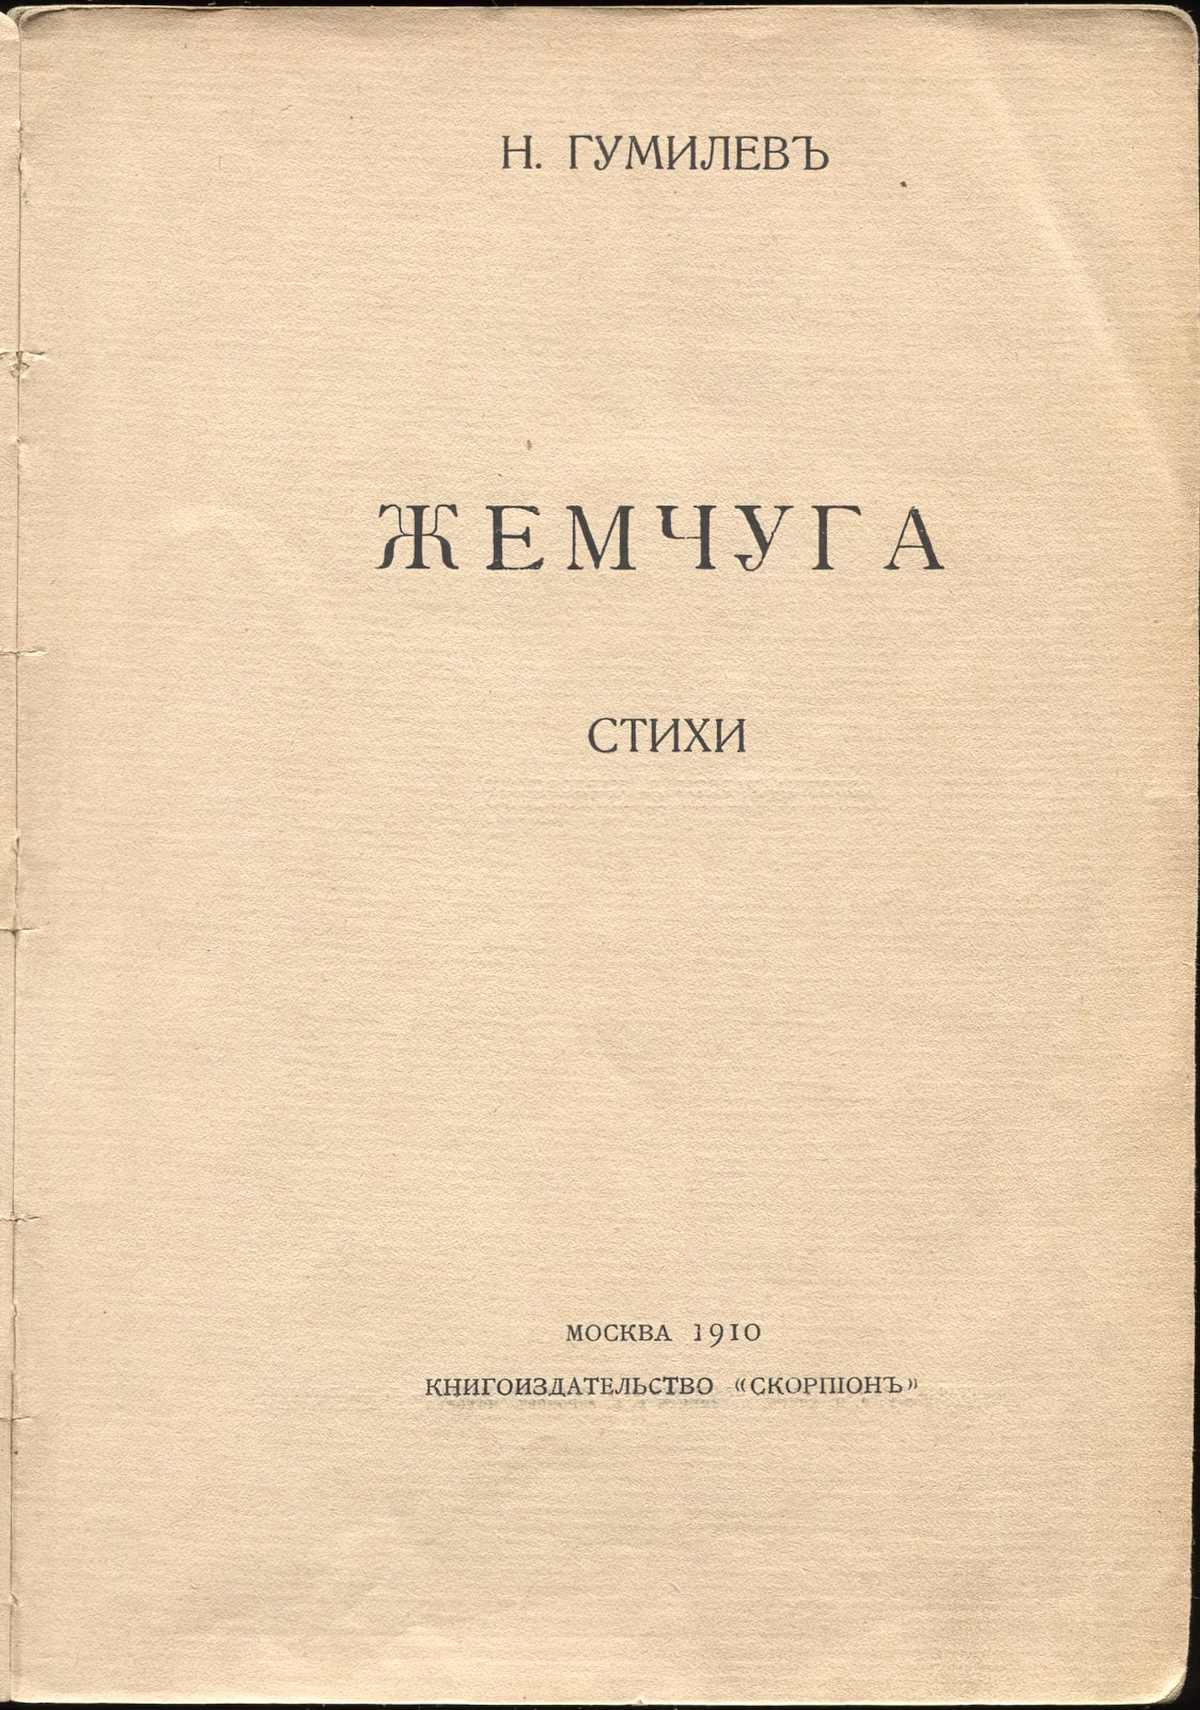 Жемчуга (1910). Титульный лист 3